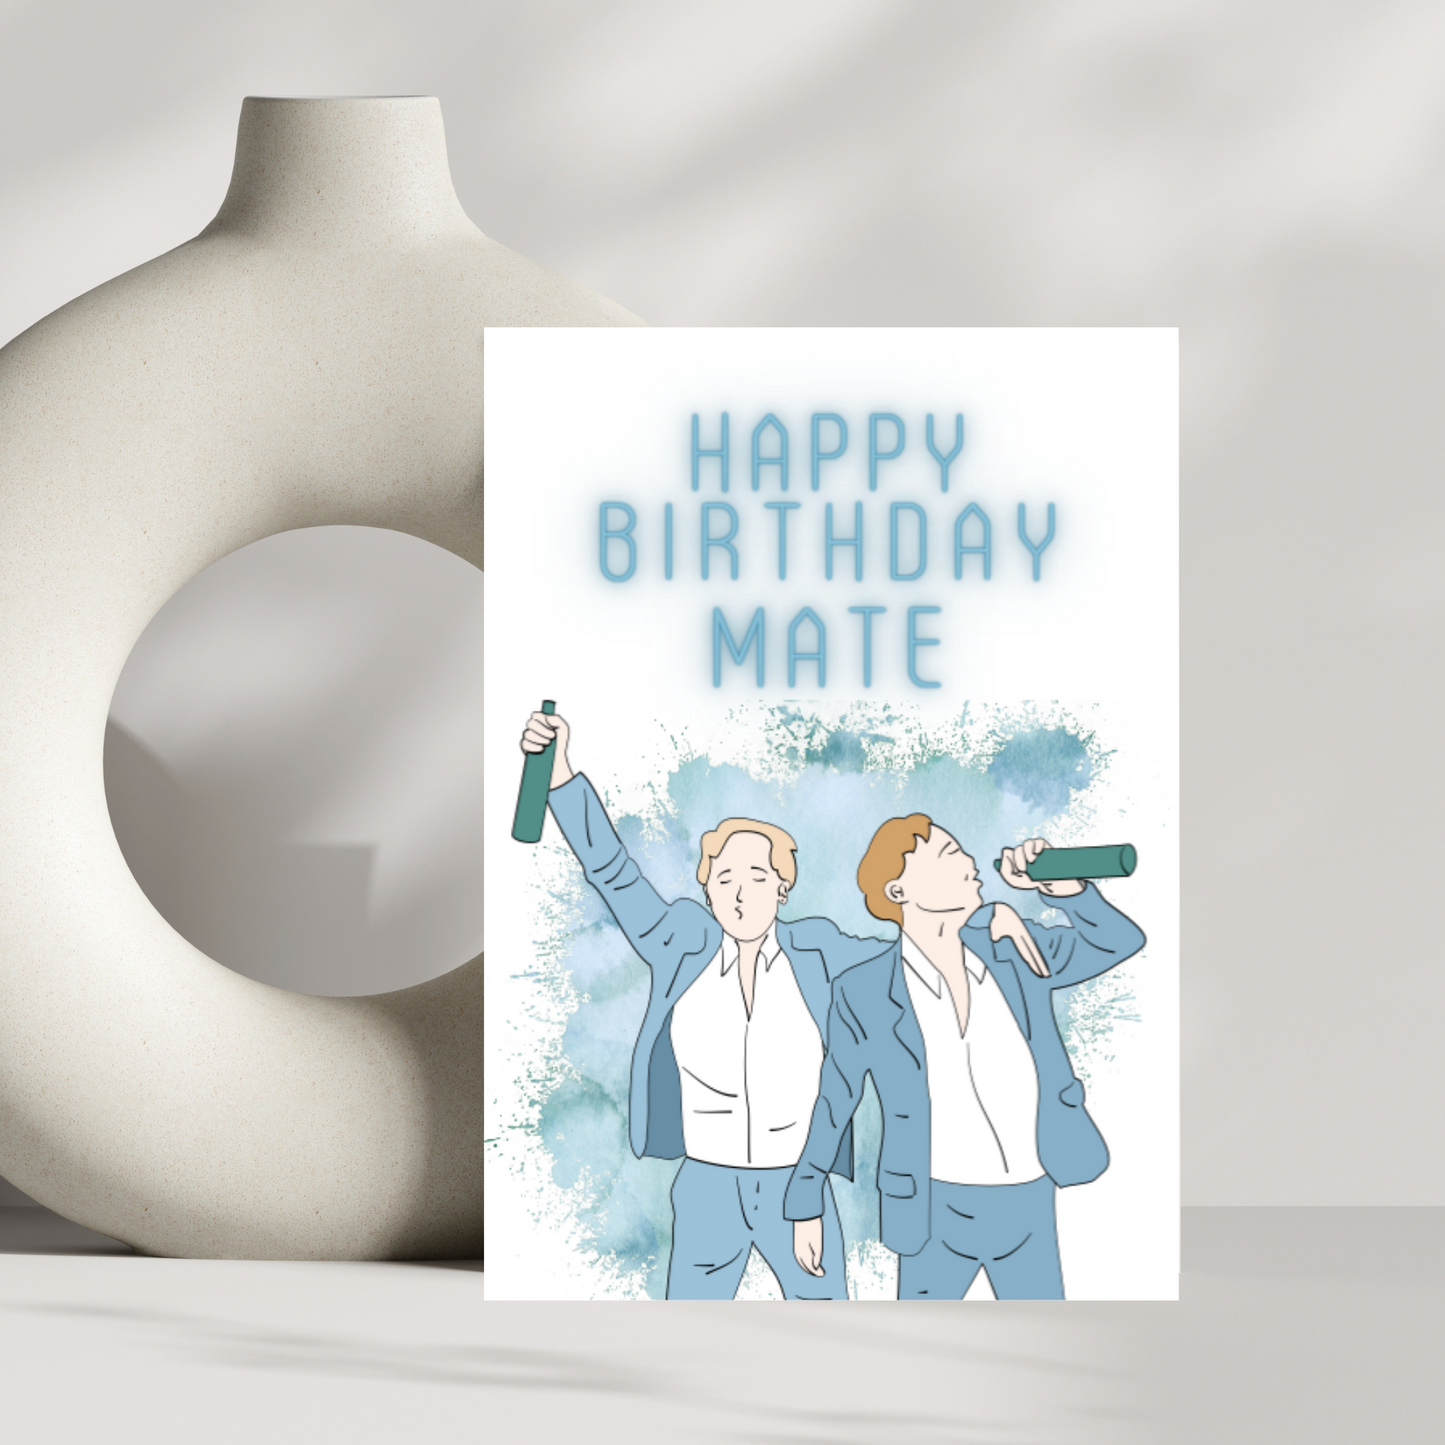 Happy Birthday mate birthday card